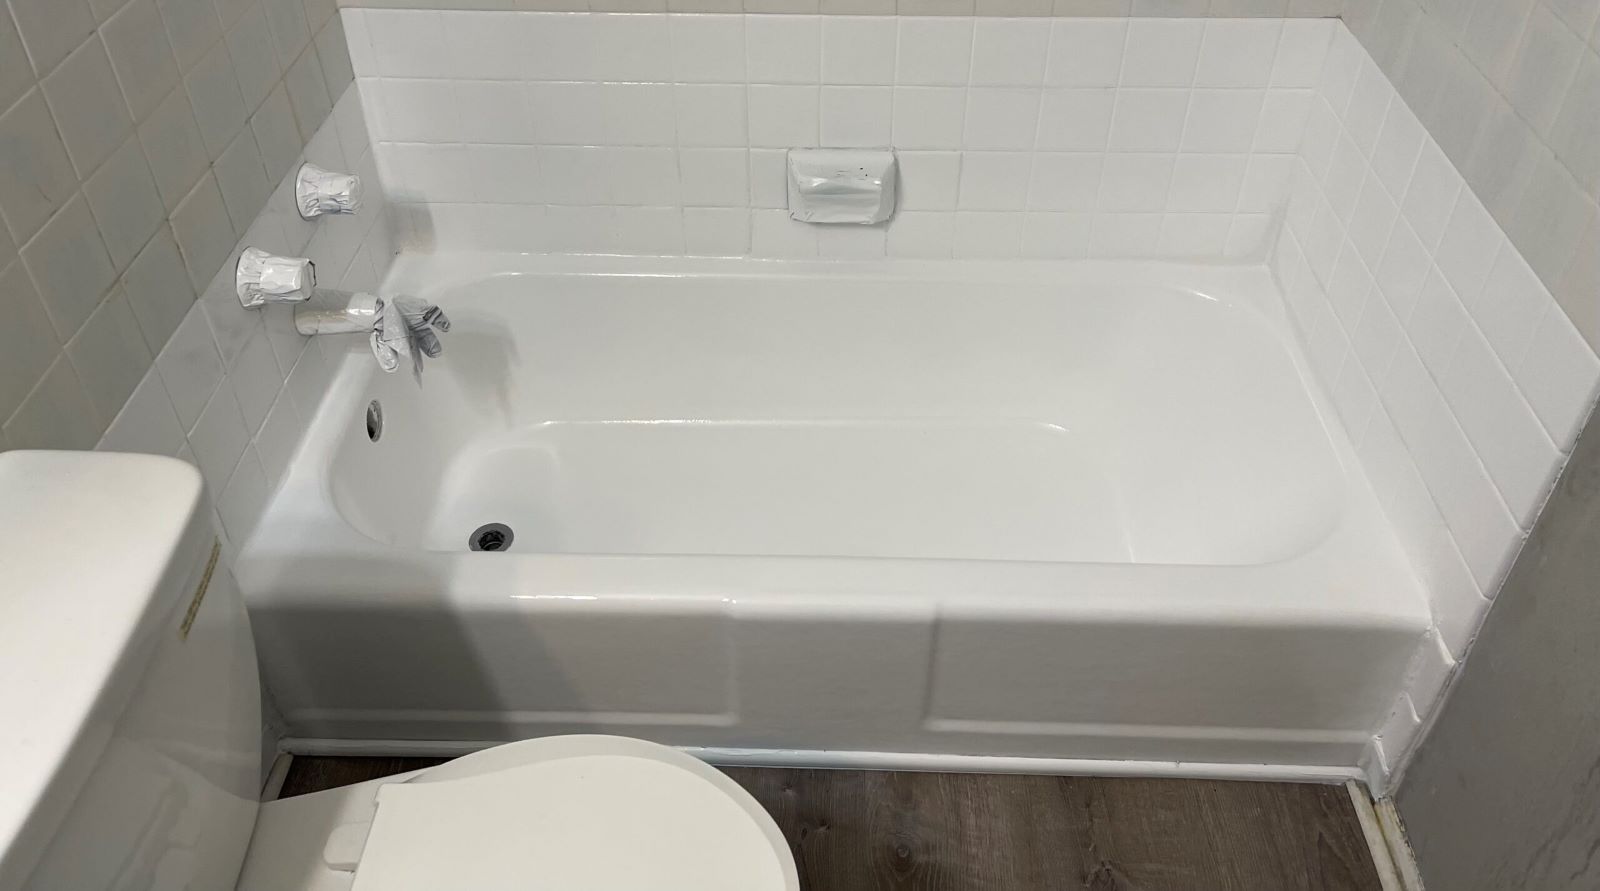 Low Cost Bathtub Refinishing in Brentwood, MO | Affordable Tub Reglazing Near Brentwood